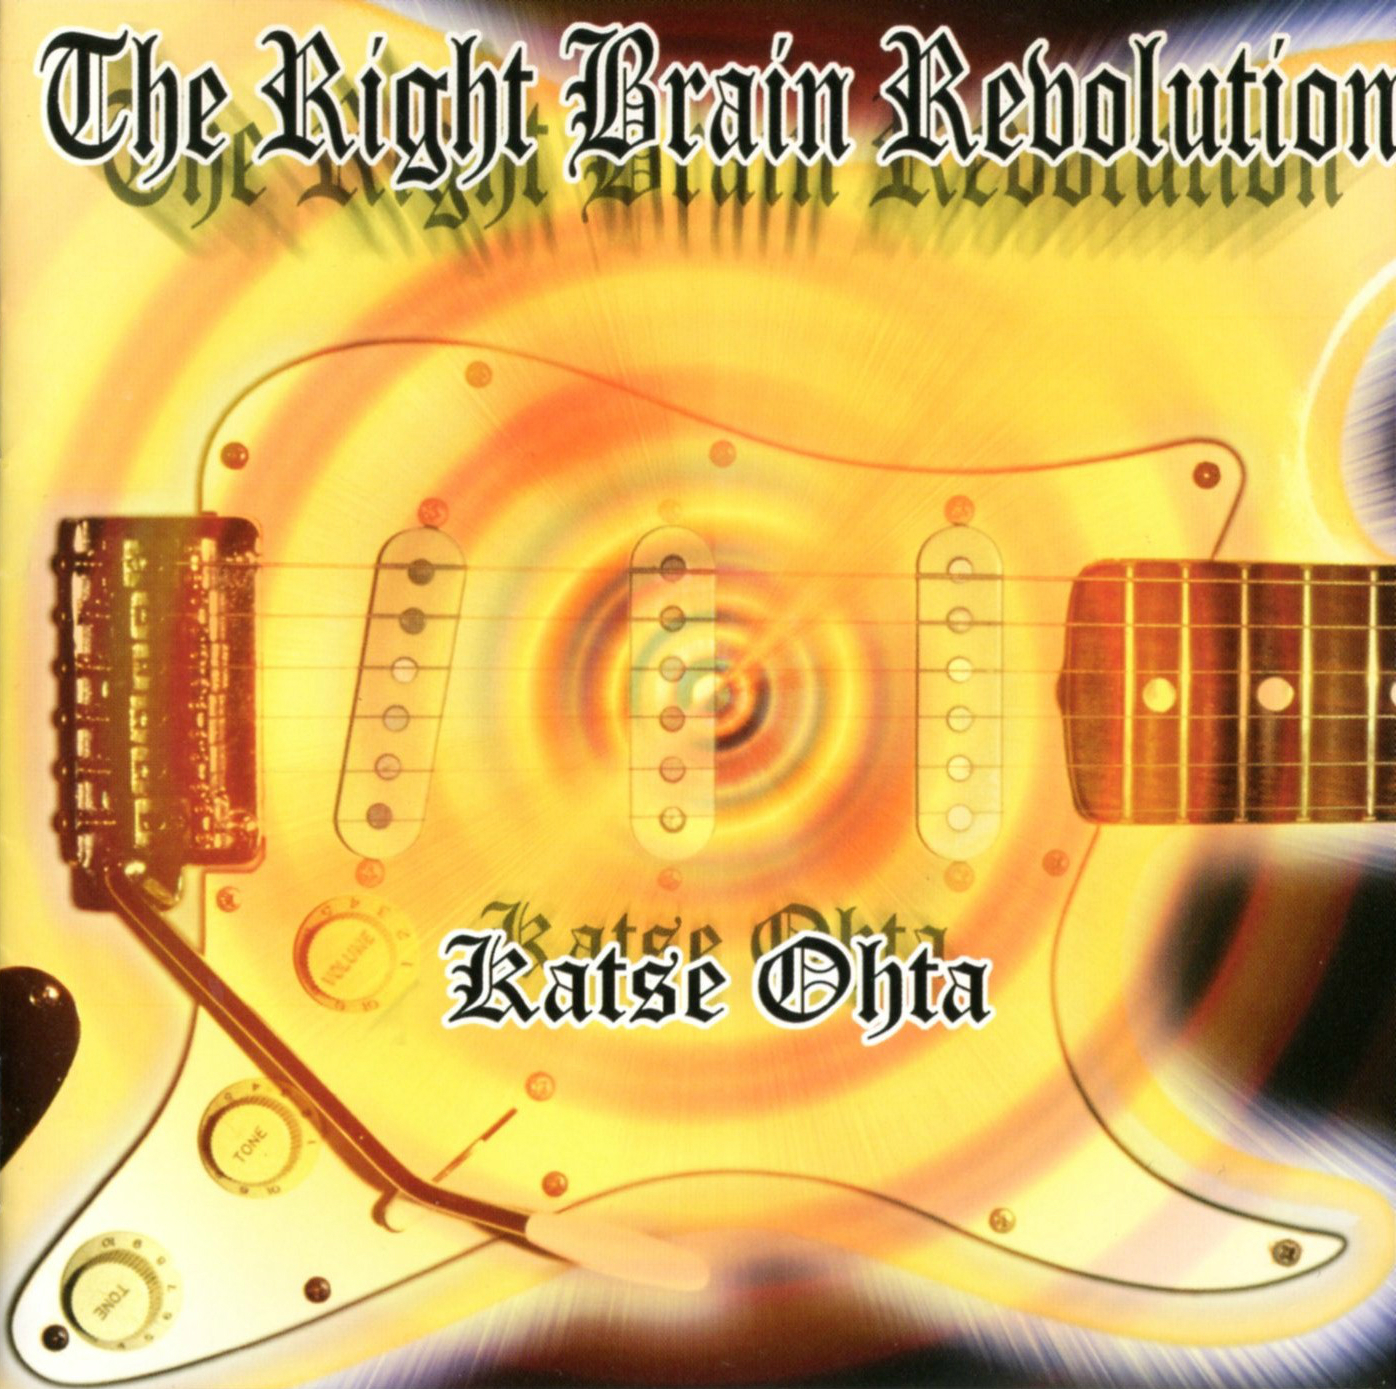 Katsu ohta the right brain revolution rar